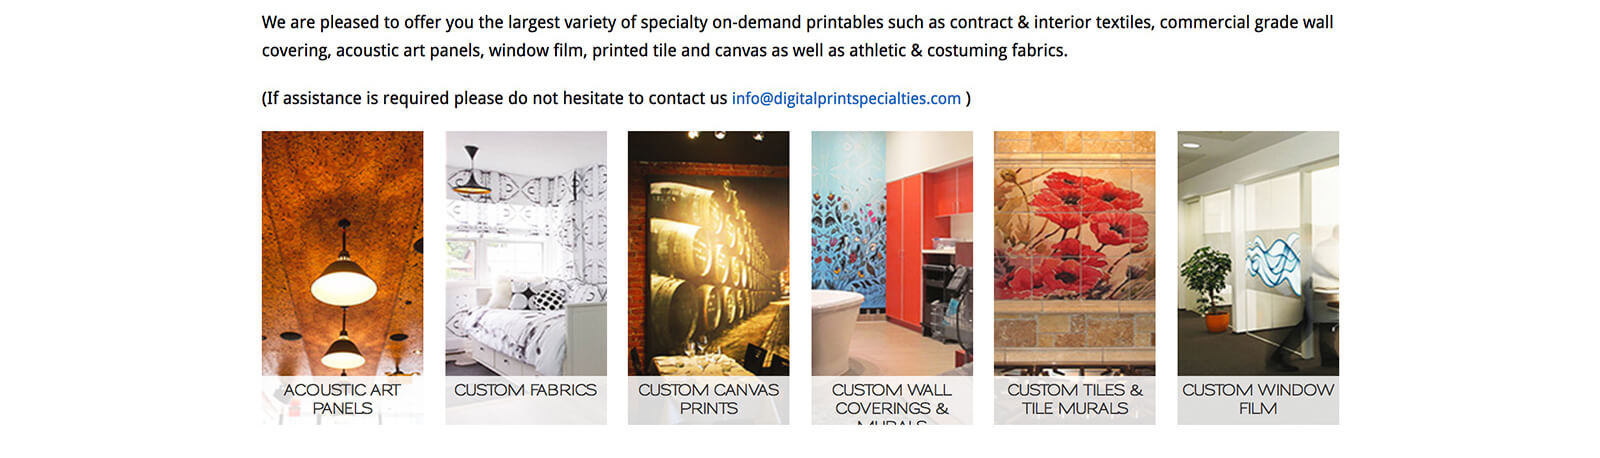 Digital Print Specialties Screenshot